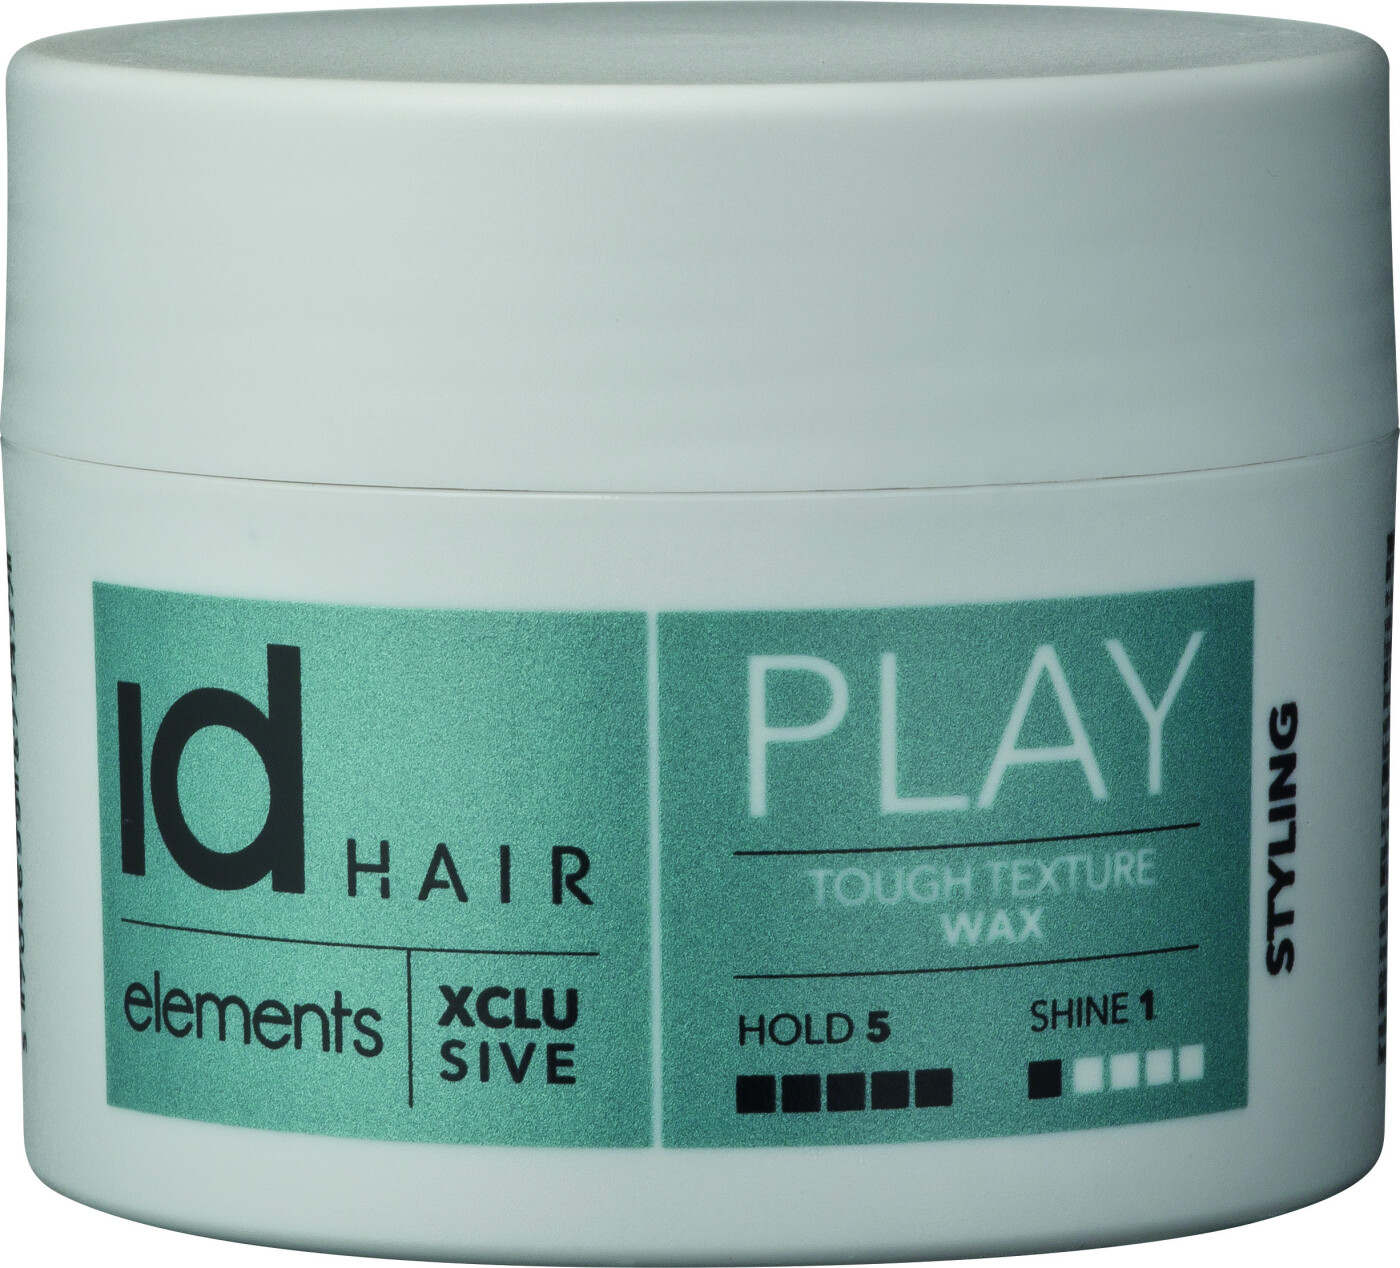 Se Id Hair - Elements Xclusive Texture Wax 100 Ml hos Gucca.dk